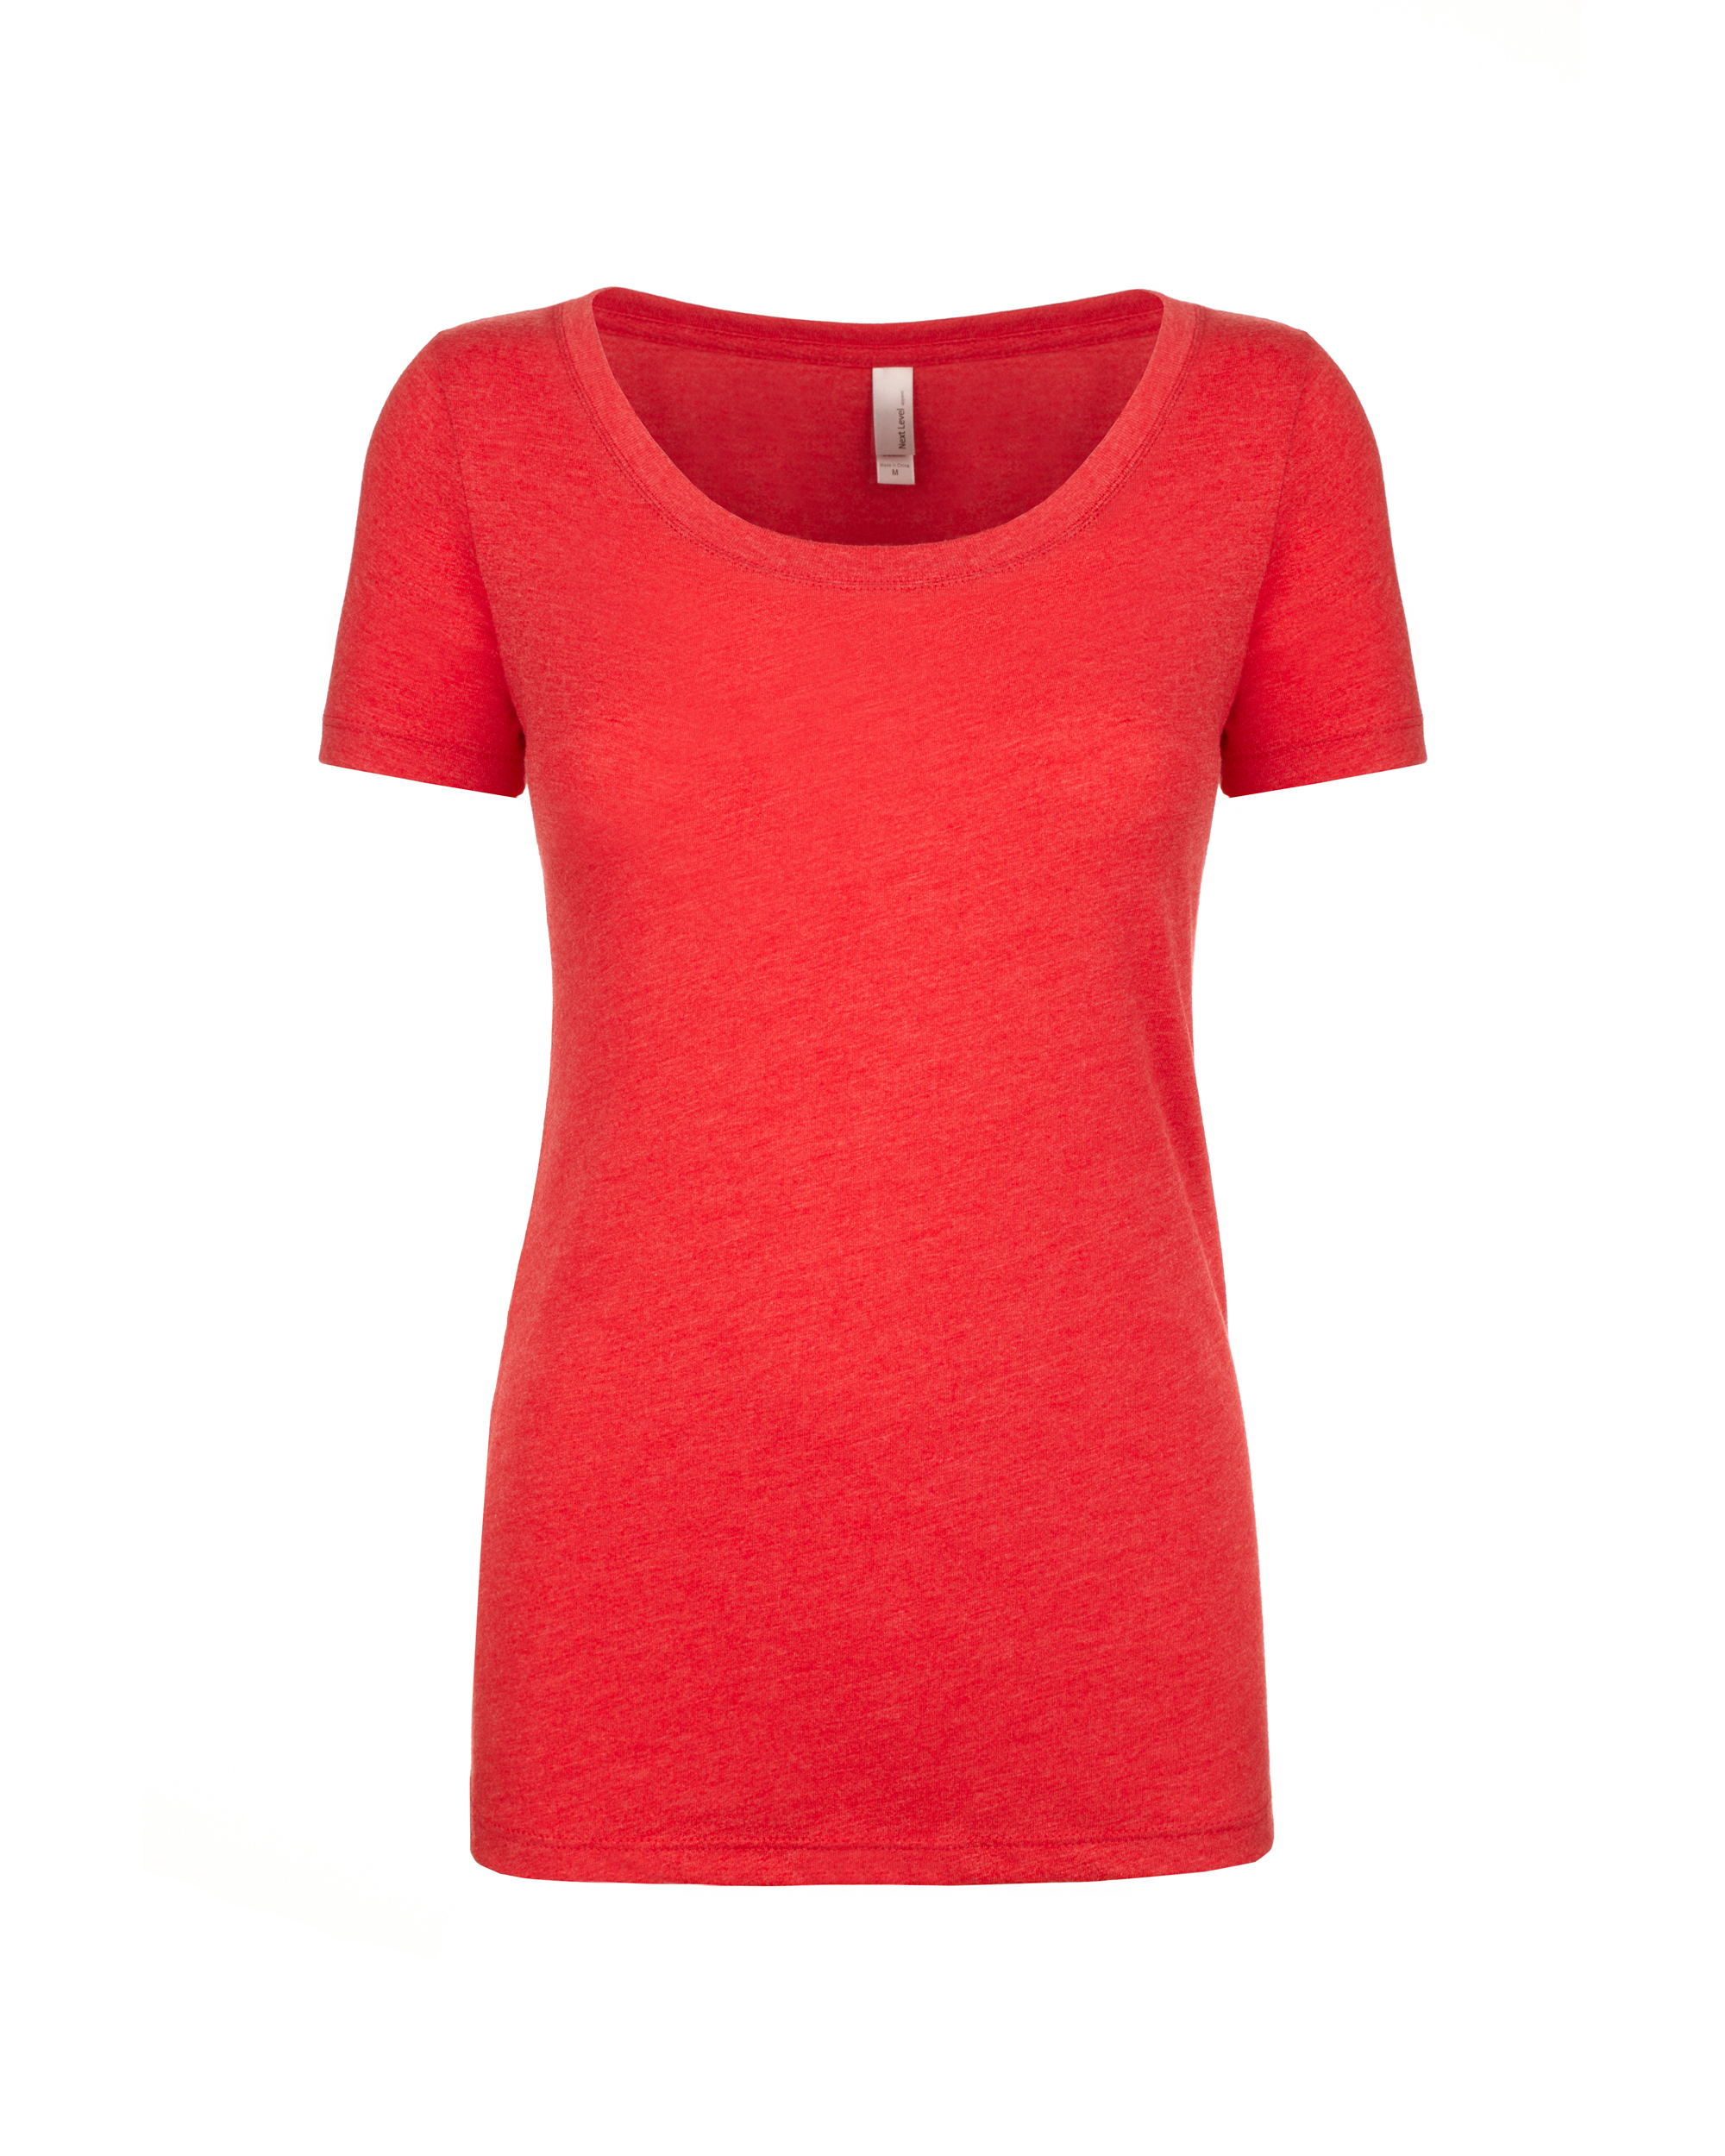 Next Level Apparel® 6730 Women's Tri-Blend Scoop Neck T-Shirt